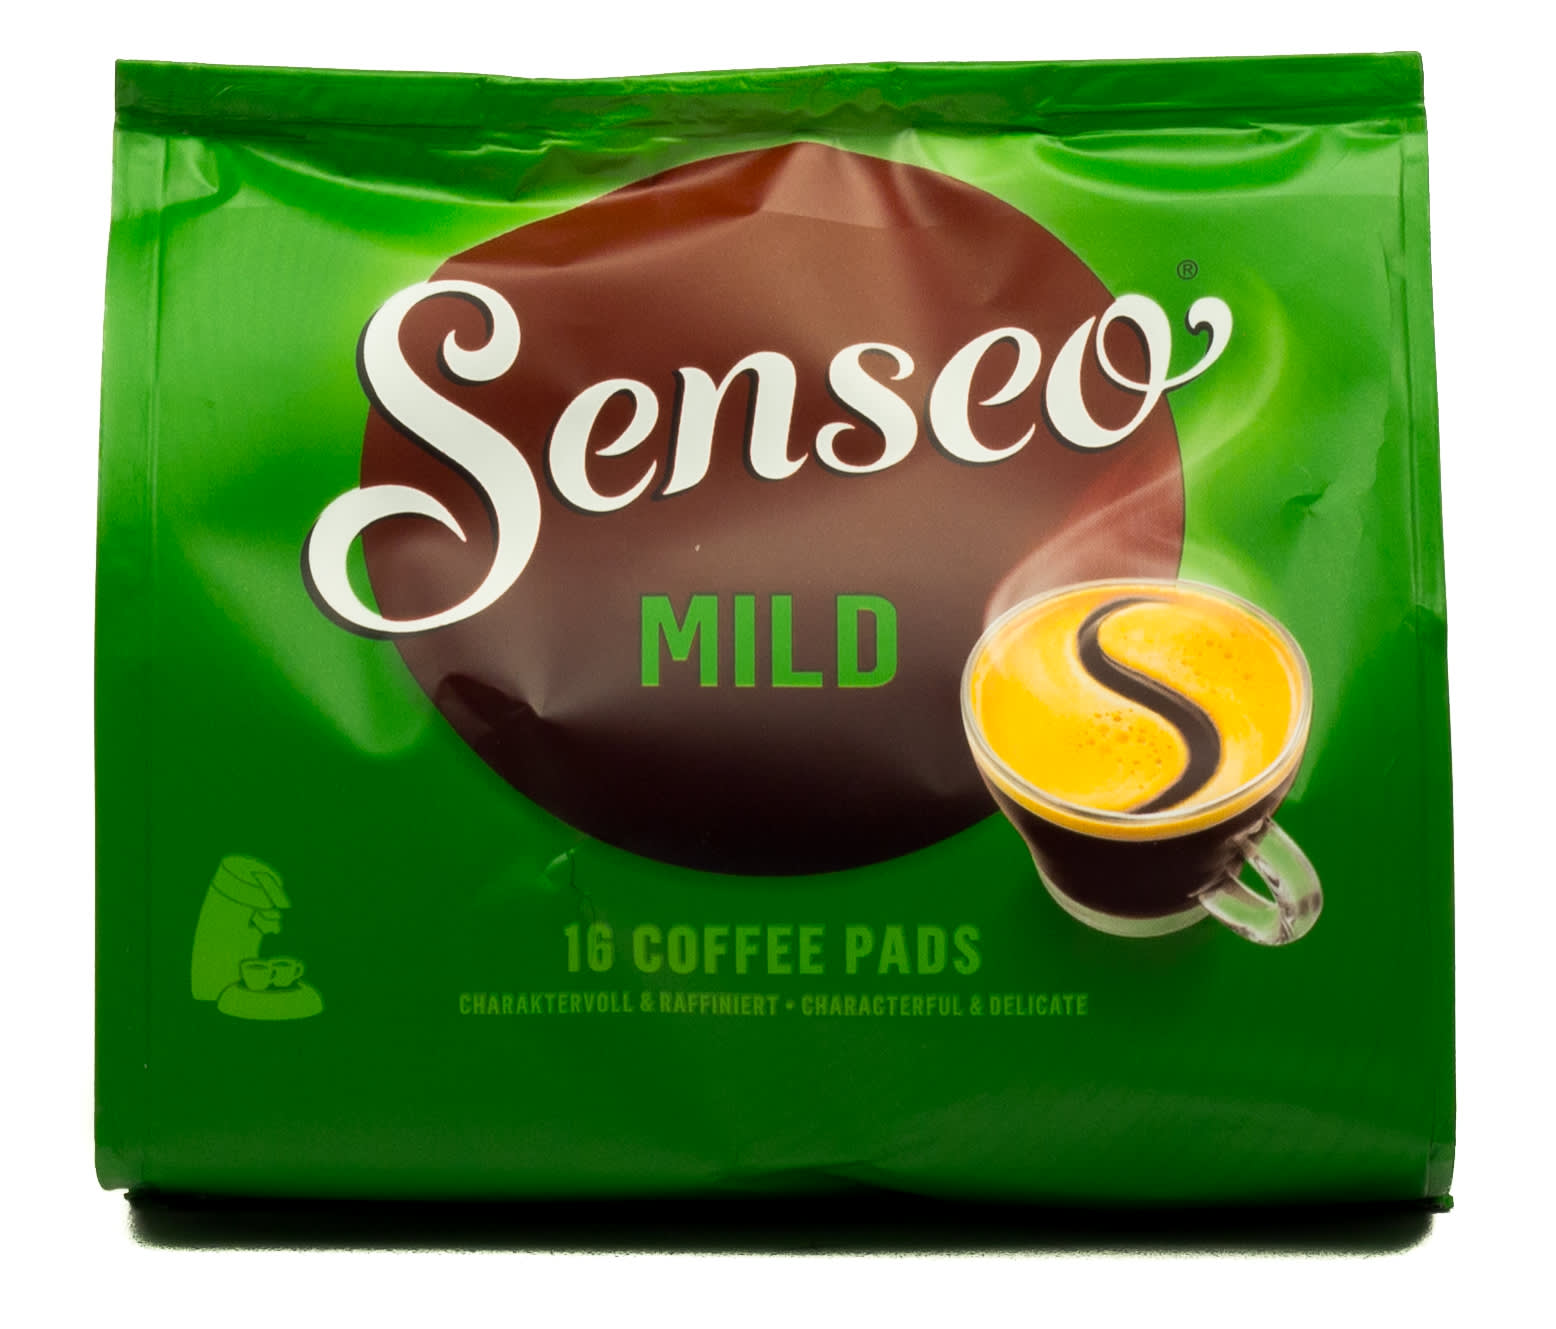 Senseo mild 16 Pads 111 g